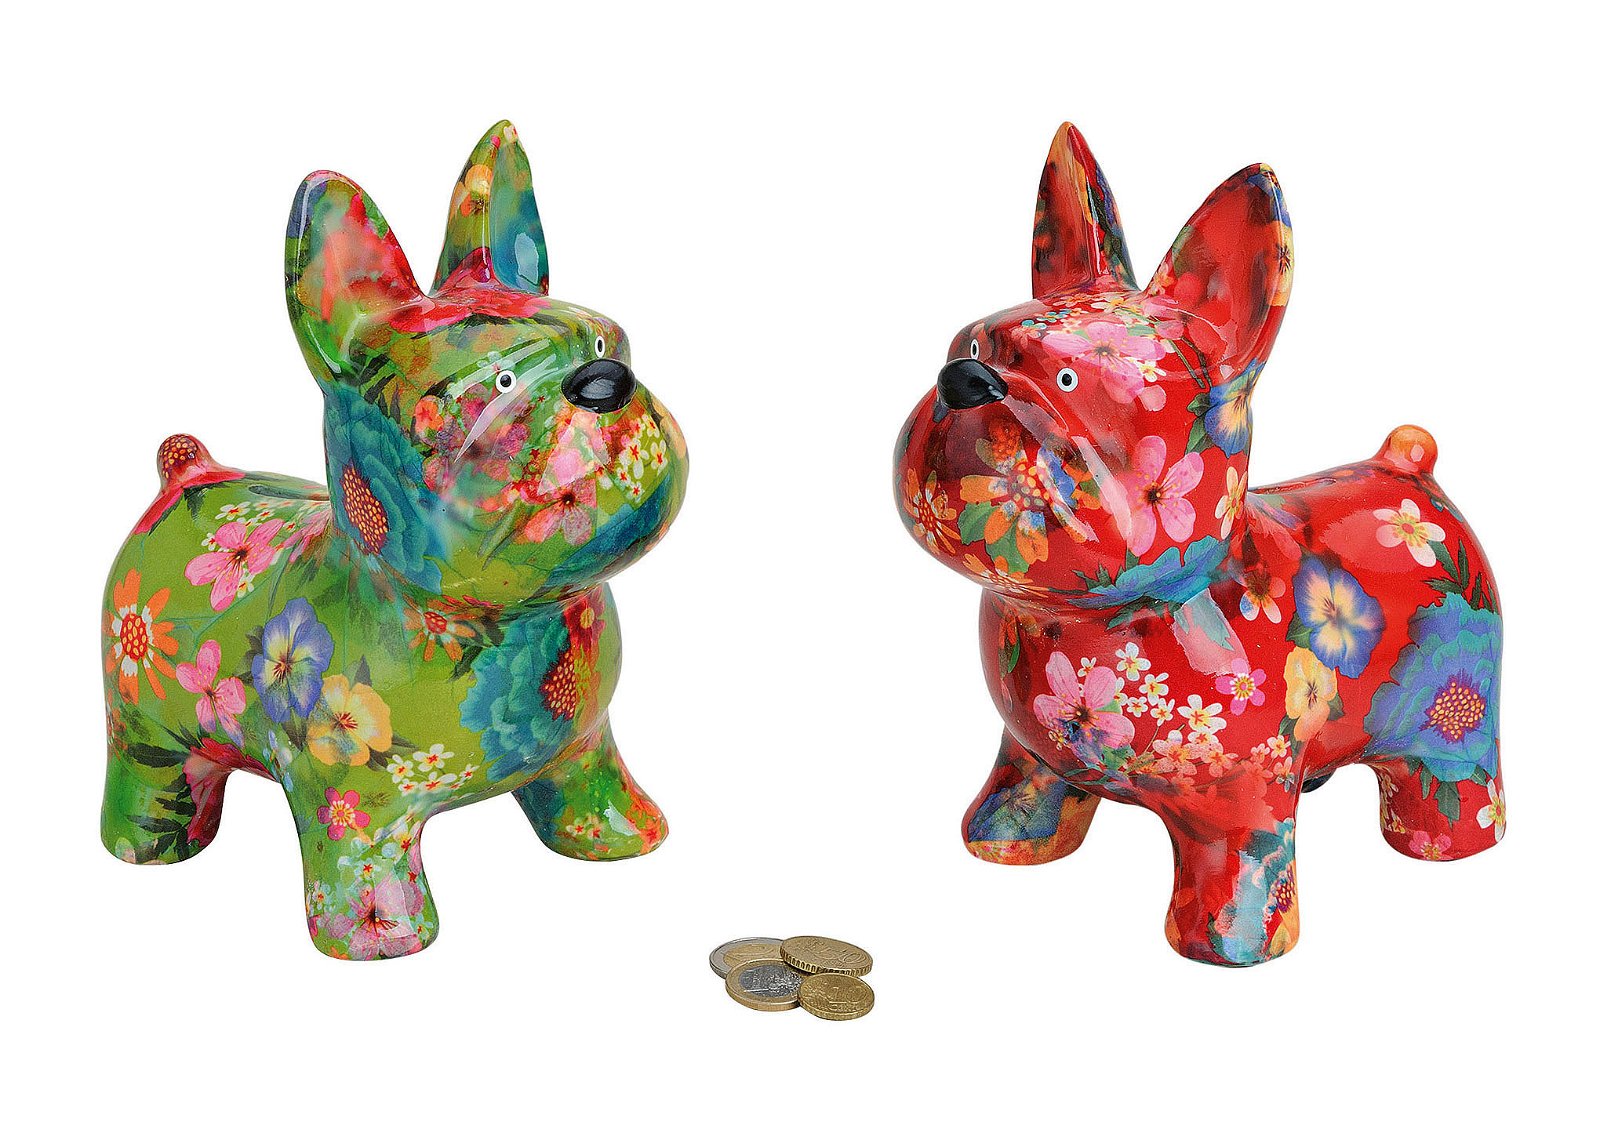 Salvadanaio cane/fiore decorazione di ceramica, 2 assortiti, L17 x P11 x H20 cm